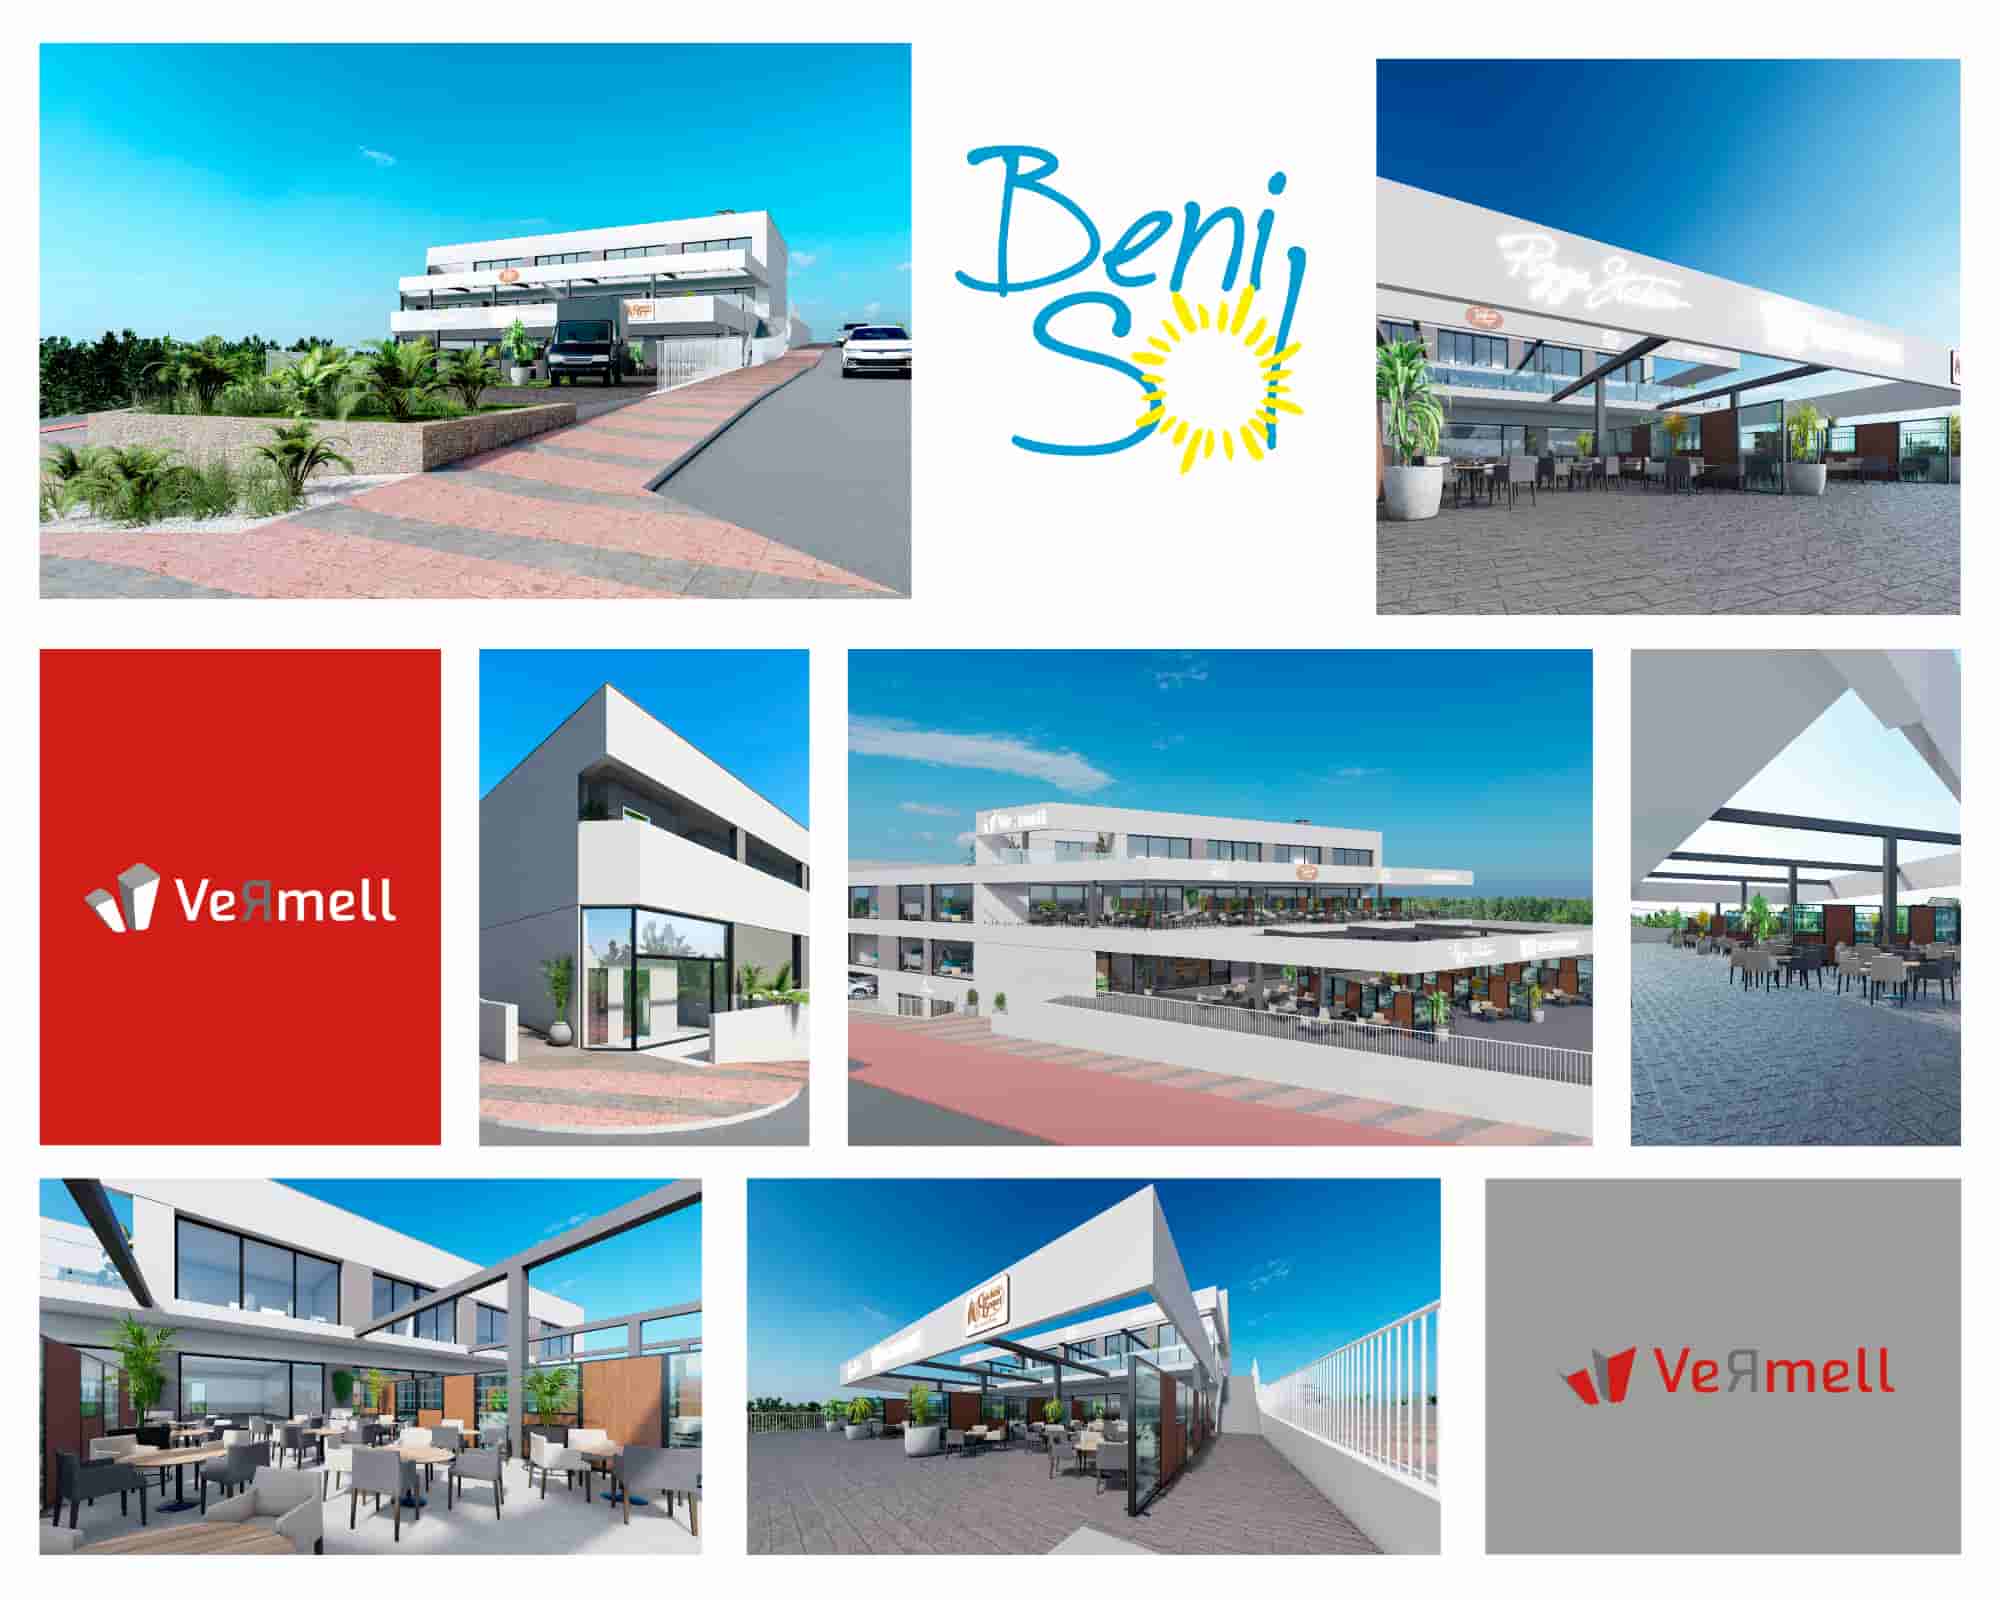 Centro comercial Benisol